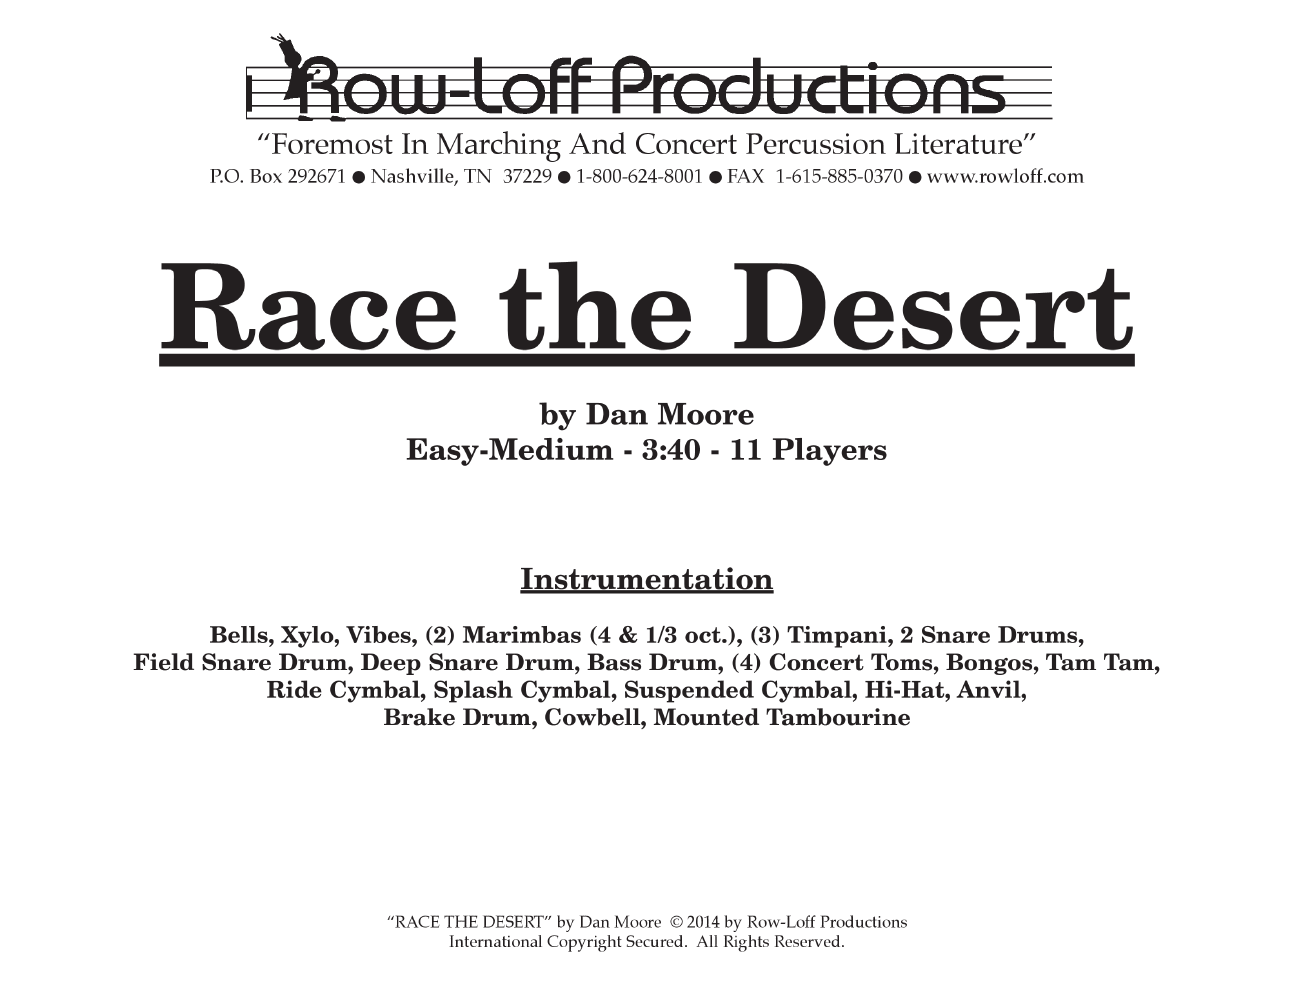 Race the Desert Percussion Ensemble